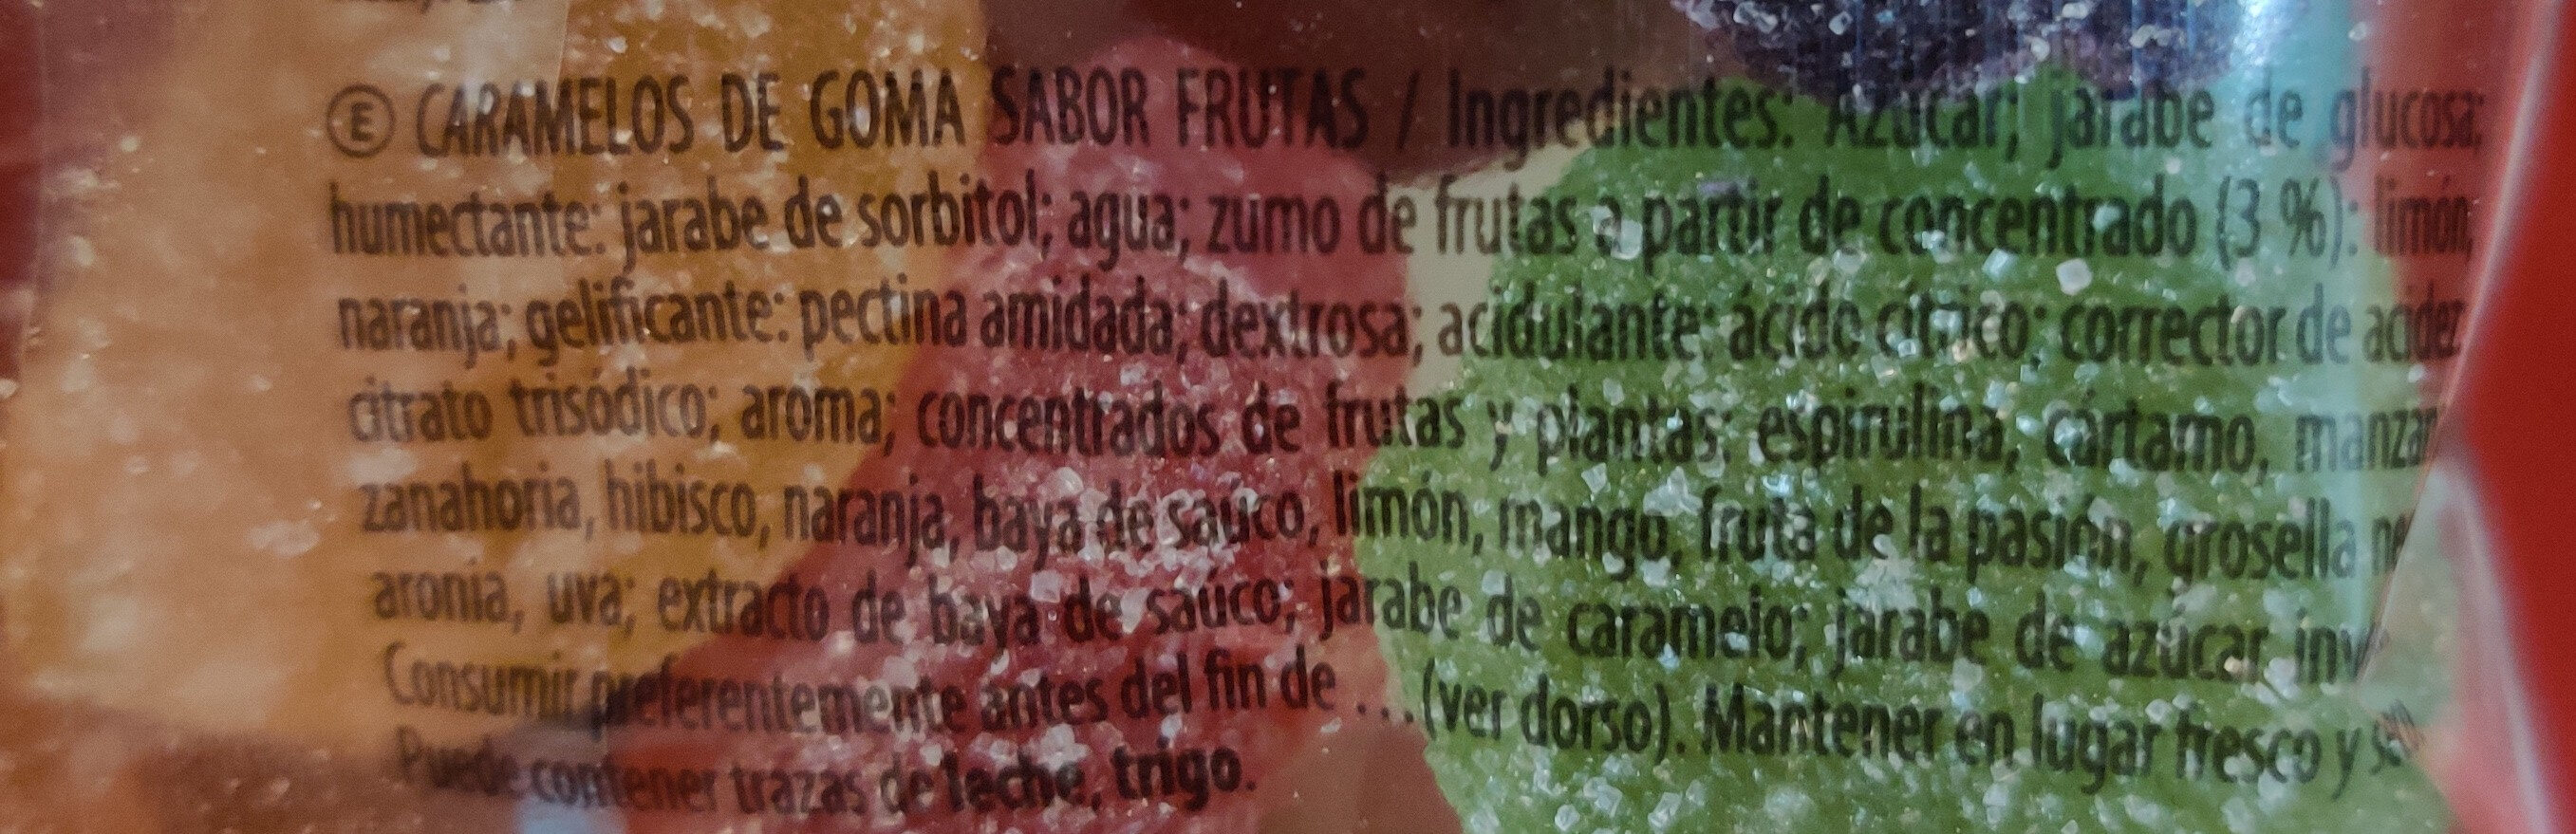 Frutissima vegana - Ingrédients